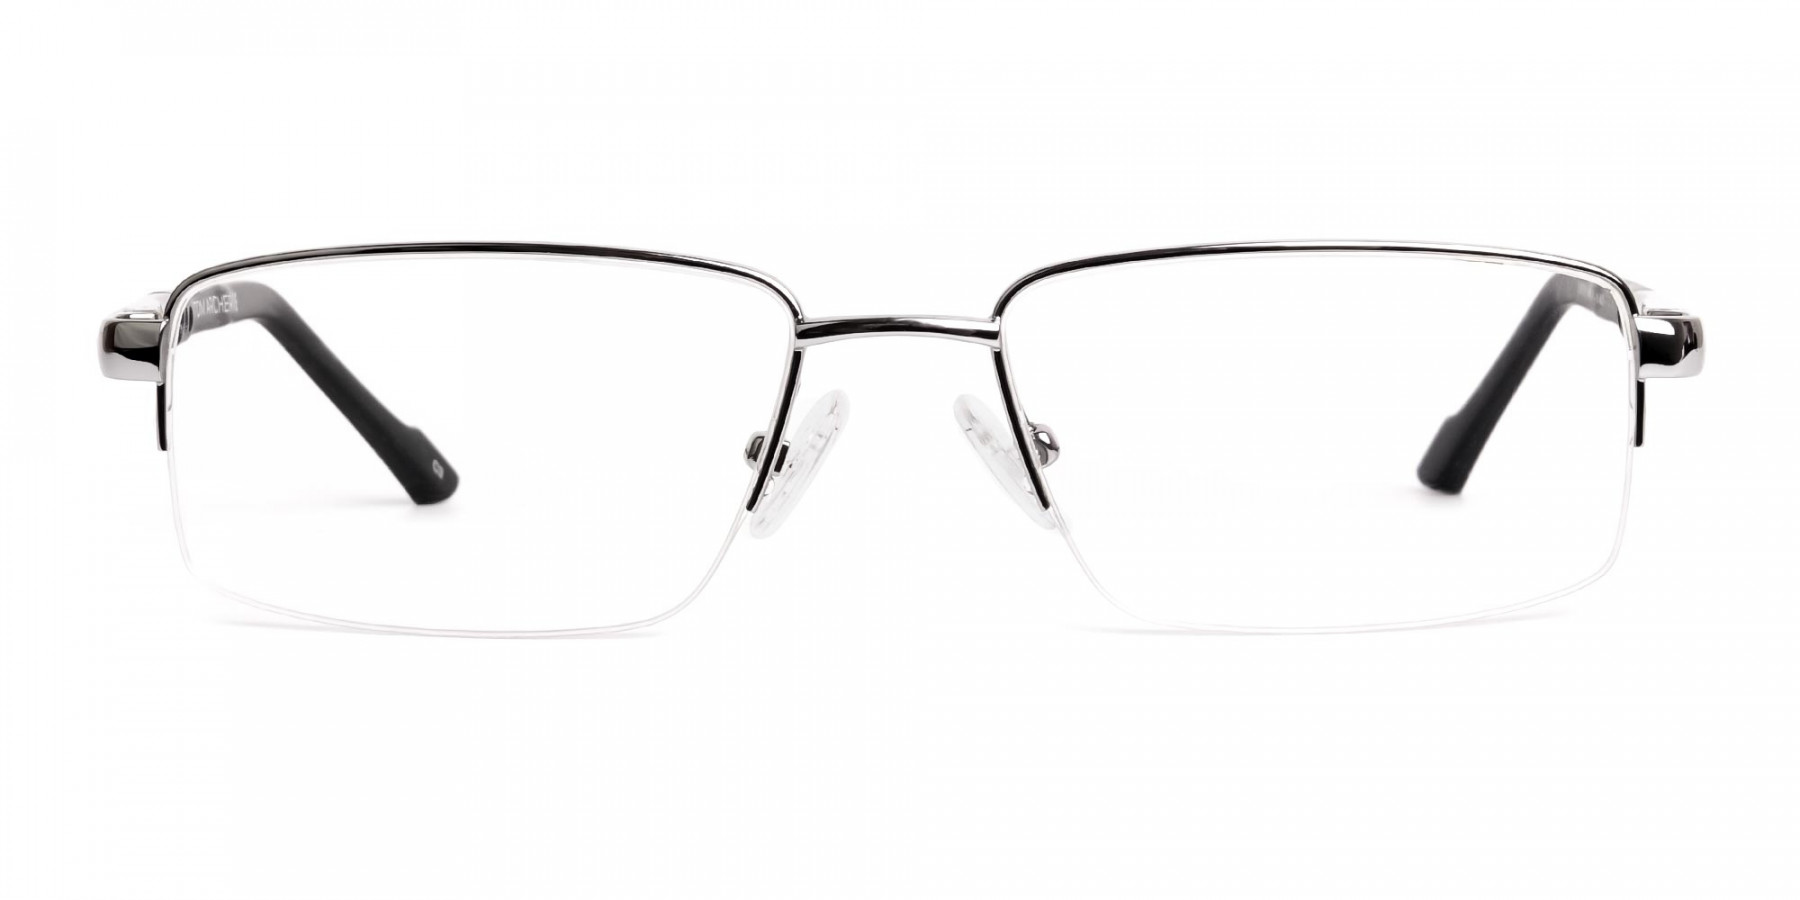 silver-and-black-half-rim-rectangular-glasses-frames -1